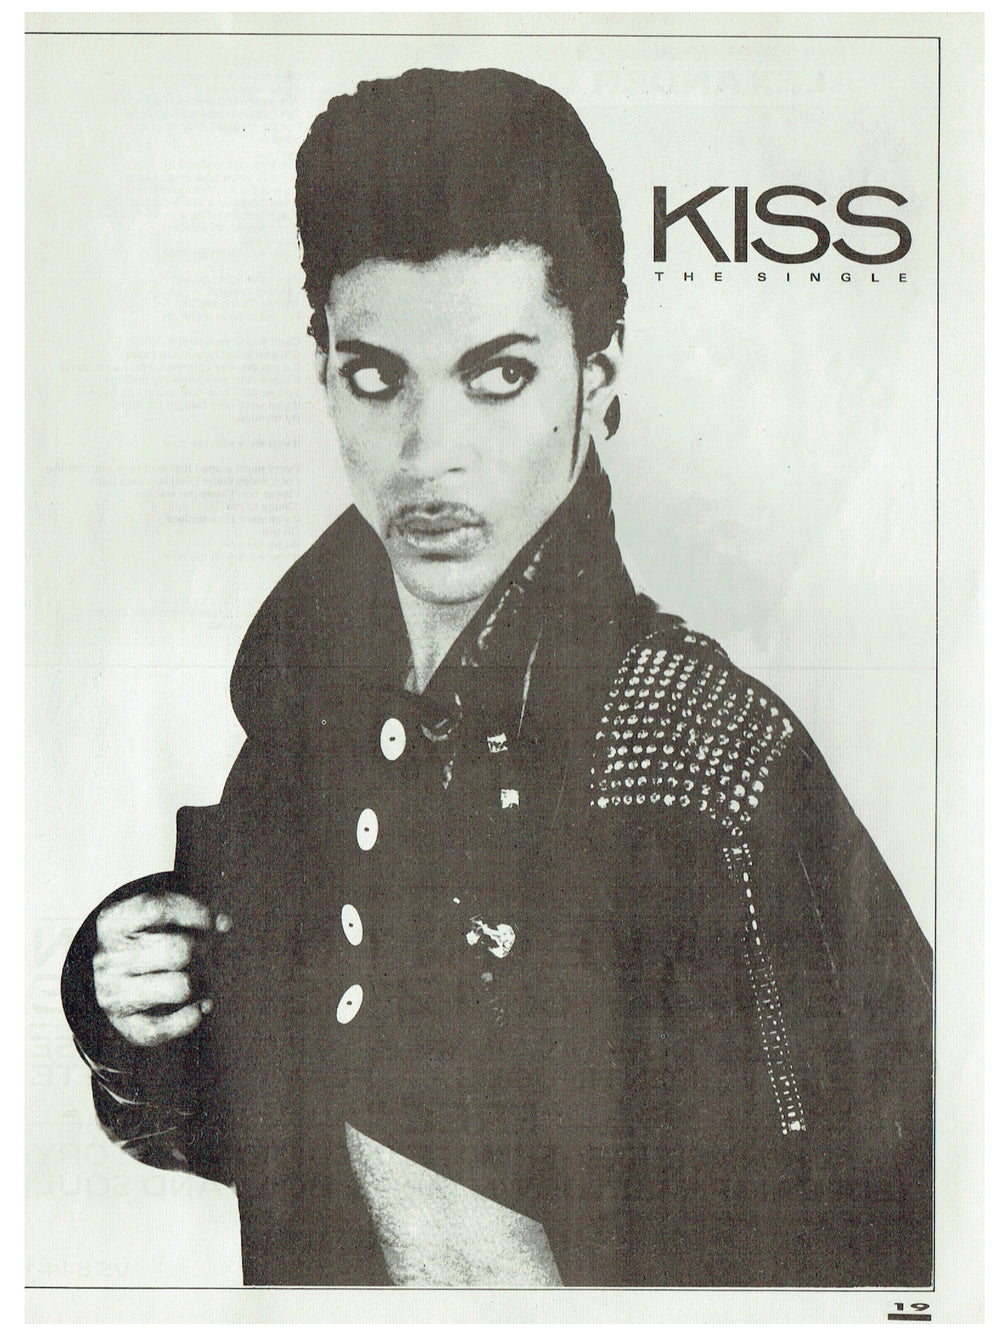 Prince KISS Original Vintage 1986 Full Page Advert 11" x 8 "